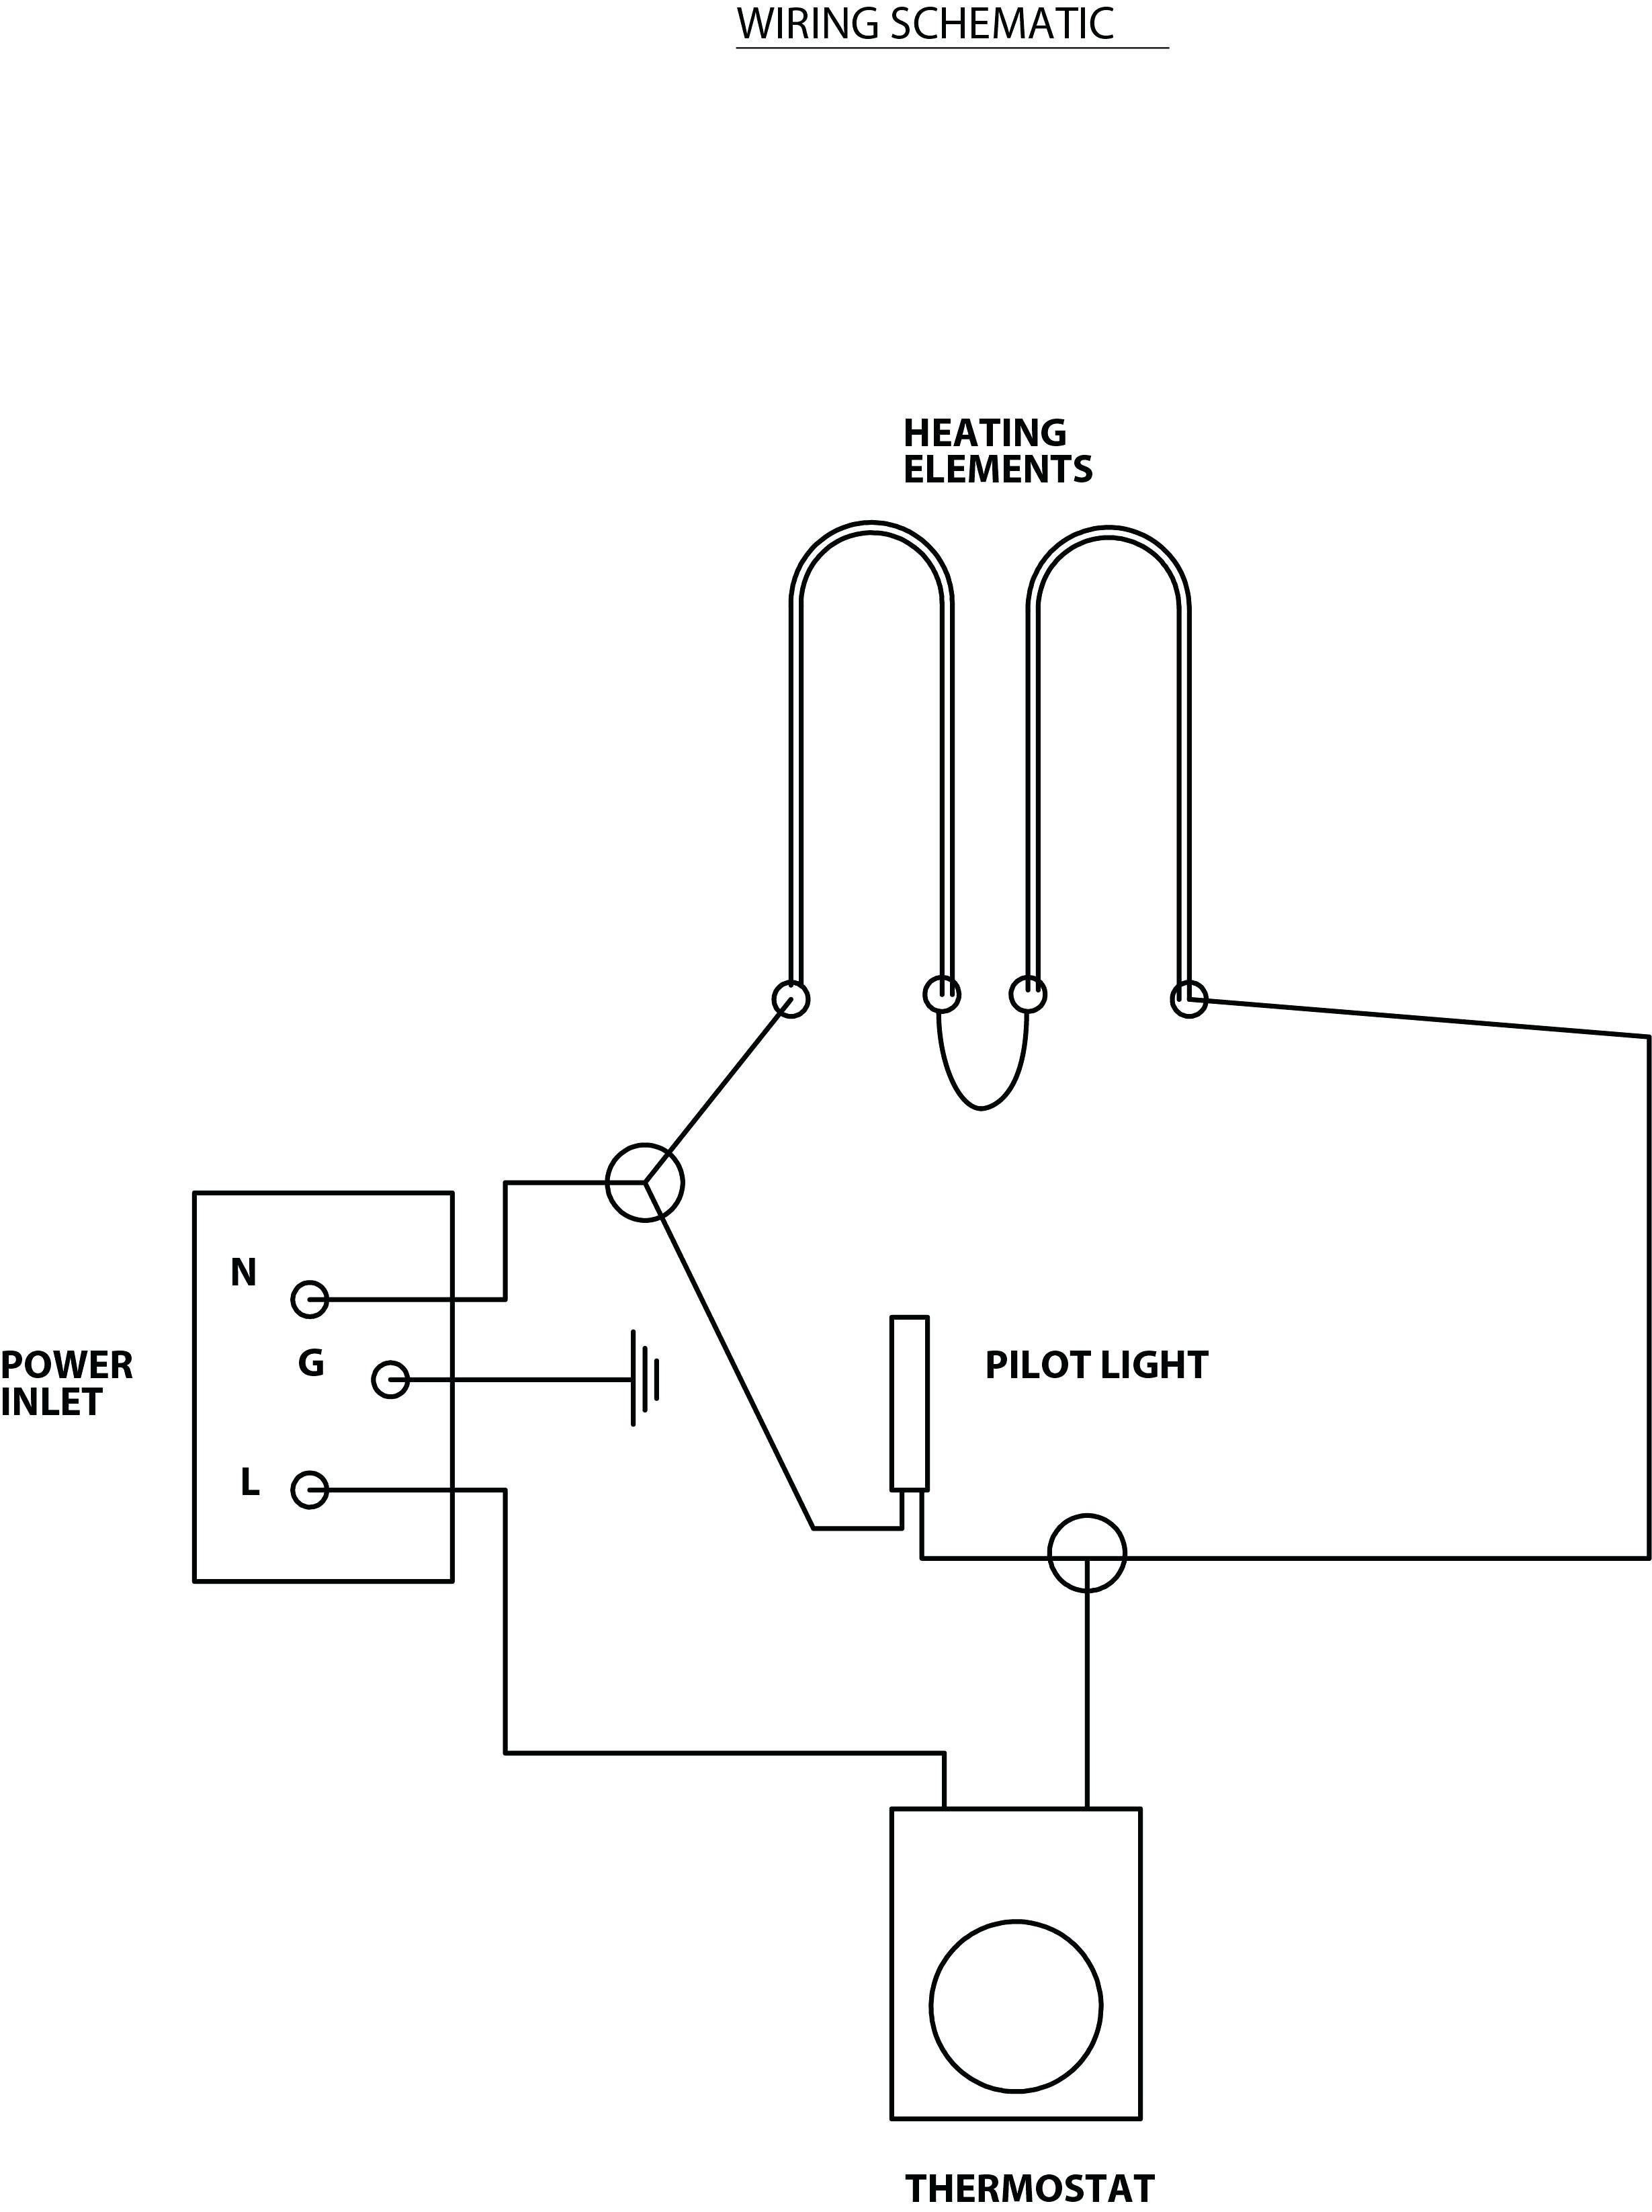 Wiring Schematic for Razor E100 Kenmore Vacuum Wiring Diagram Of Wiring Schematic for Razor E100